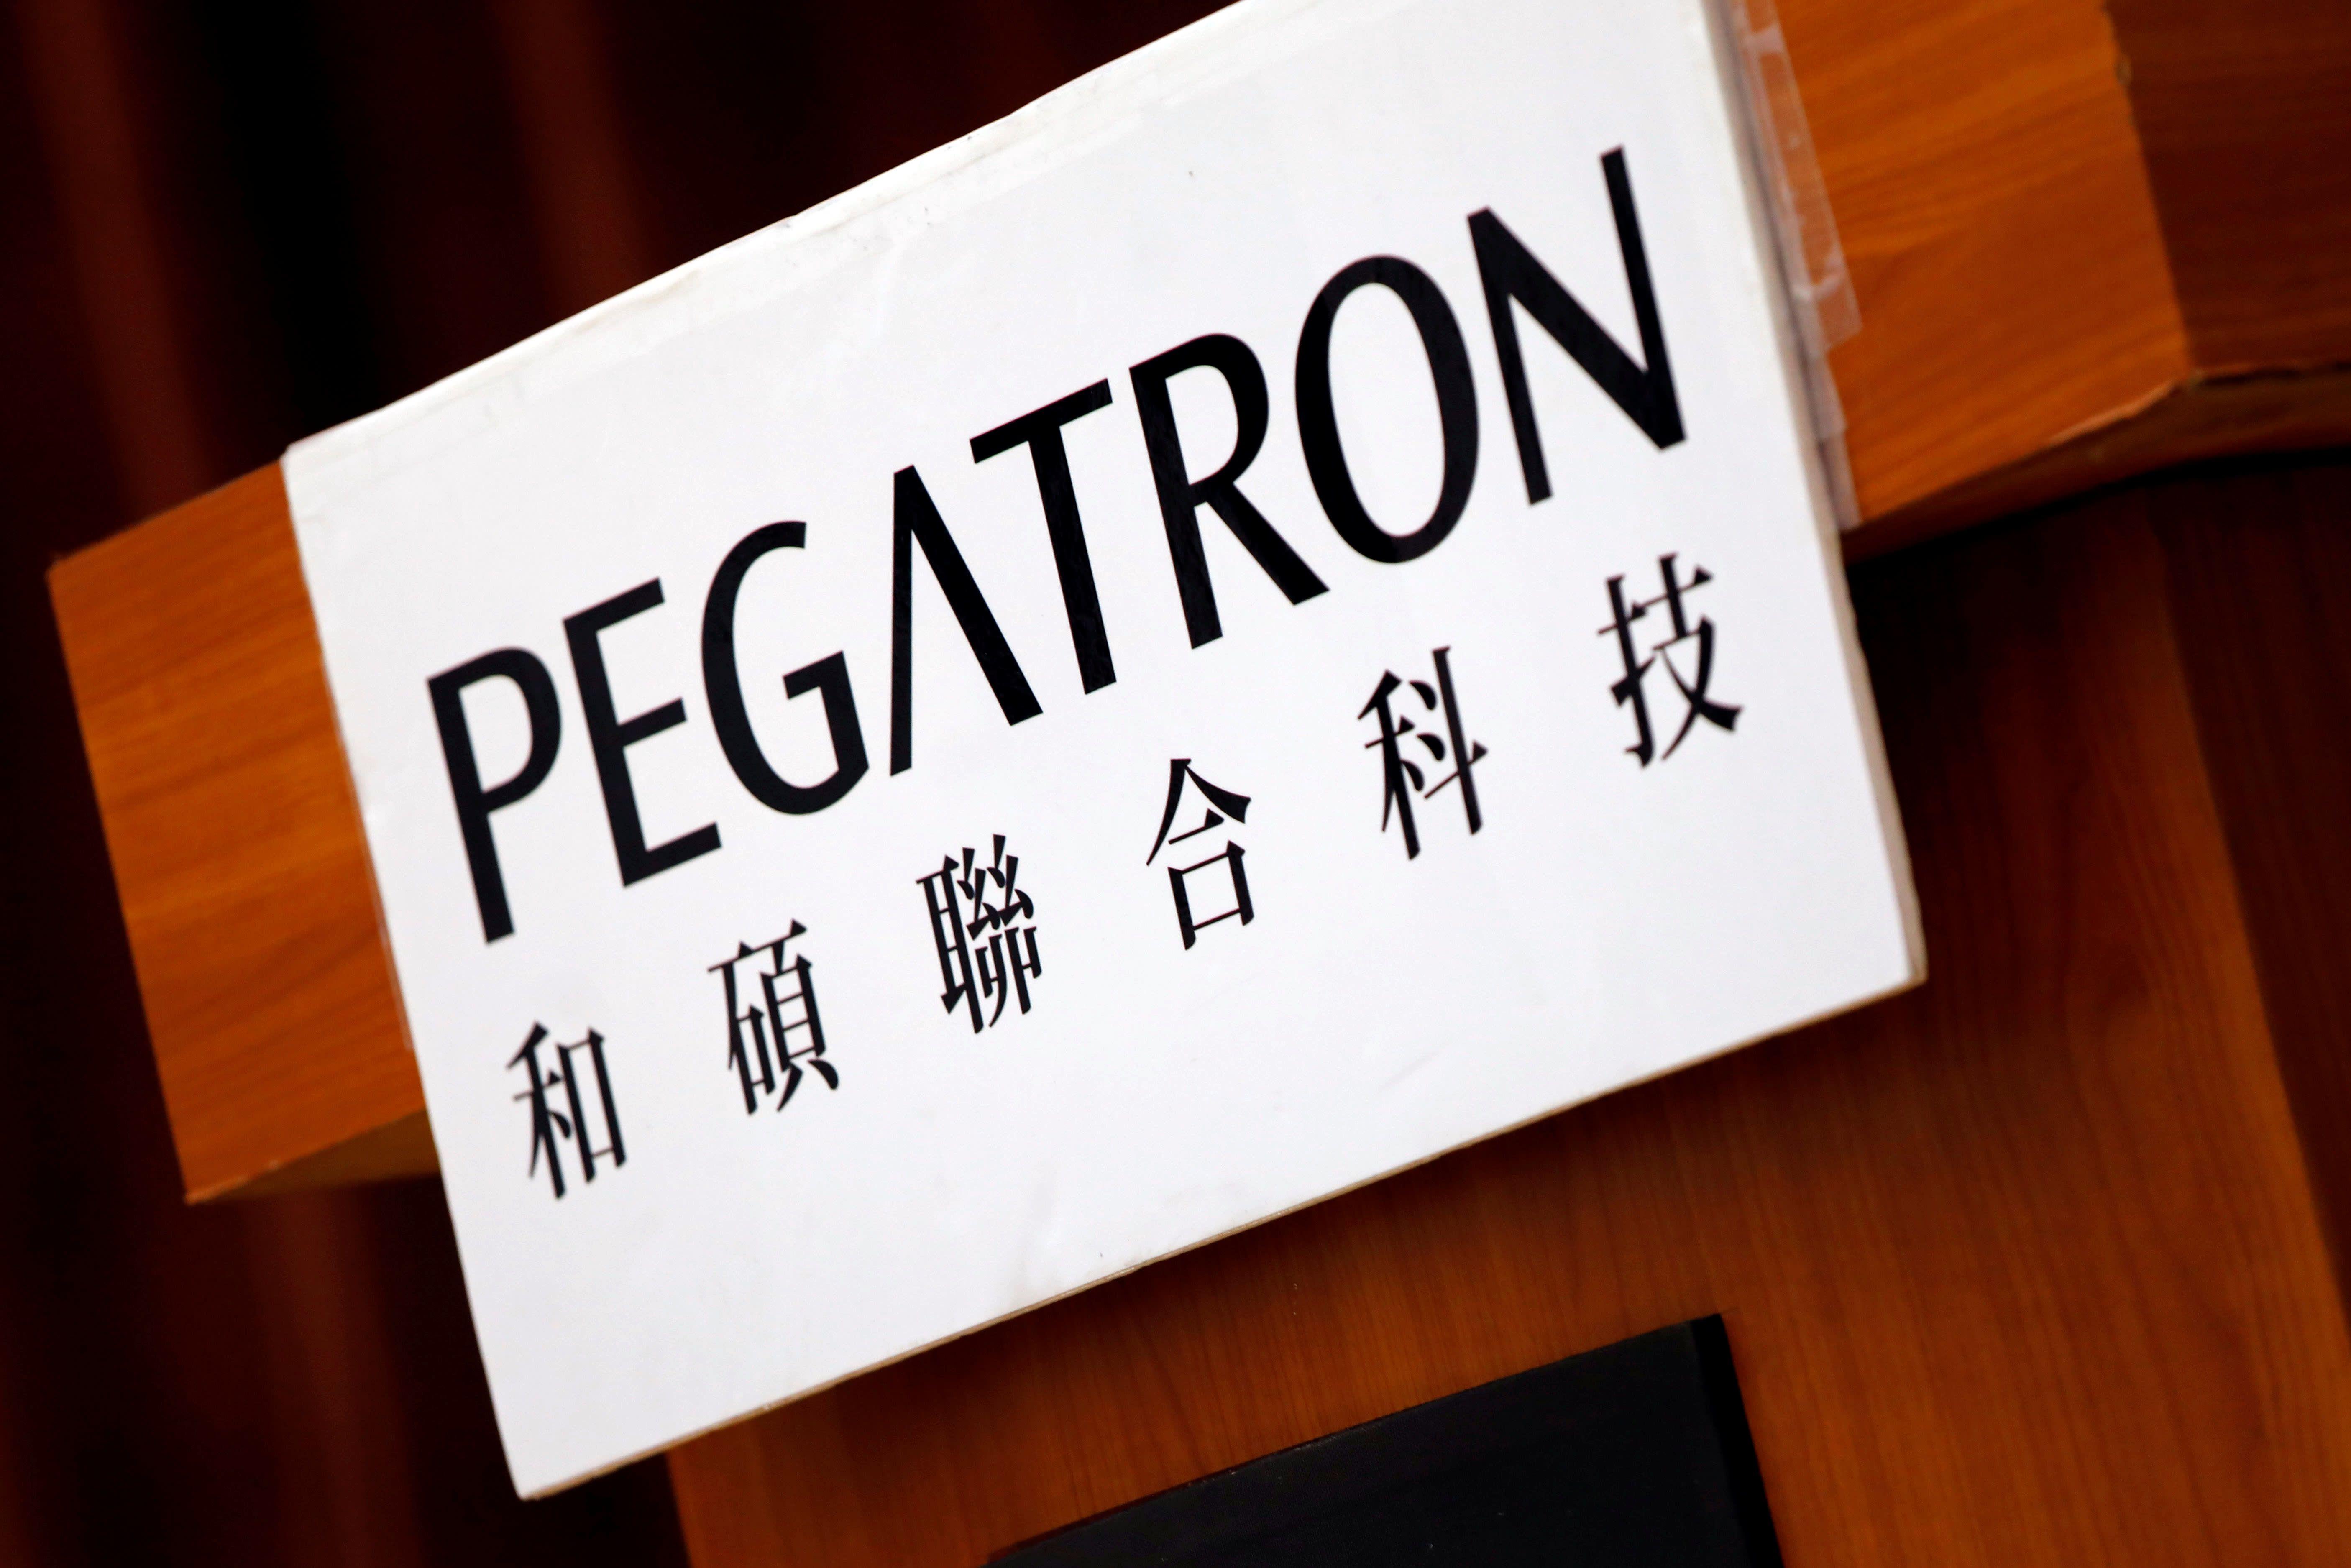 Pegatron Logo - Apple supplier Pegatron upbeat on premium phone market for 2018 ...